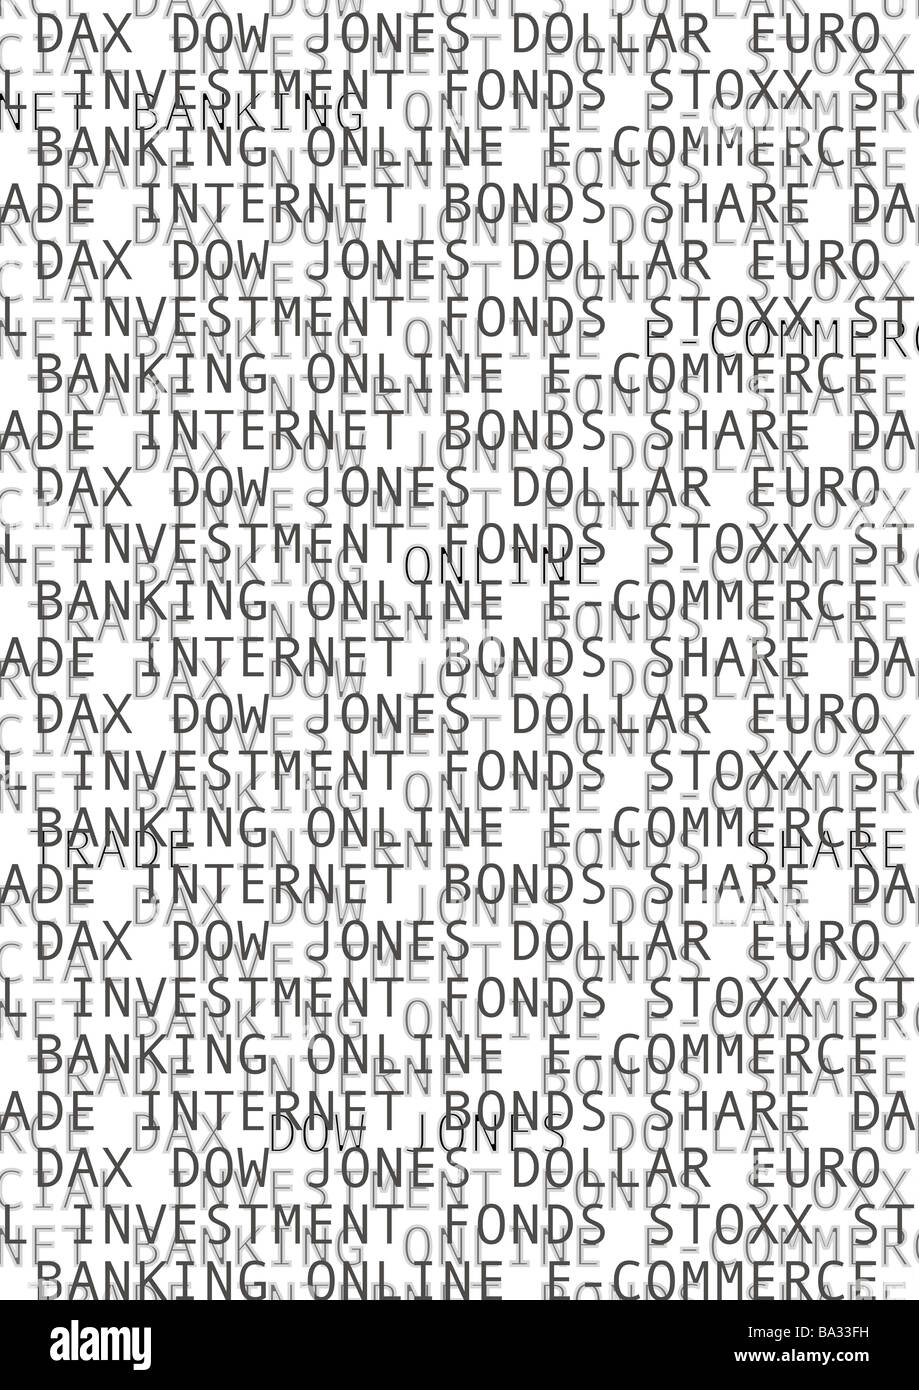 Illustration finance-market strokes Euro dollar Dax fund Stoxx E-commerce Dow Jones series shares share prices Stock Photo